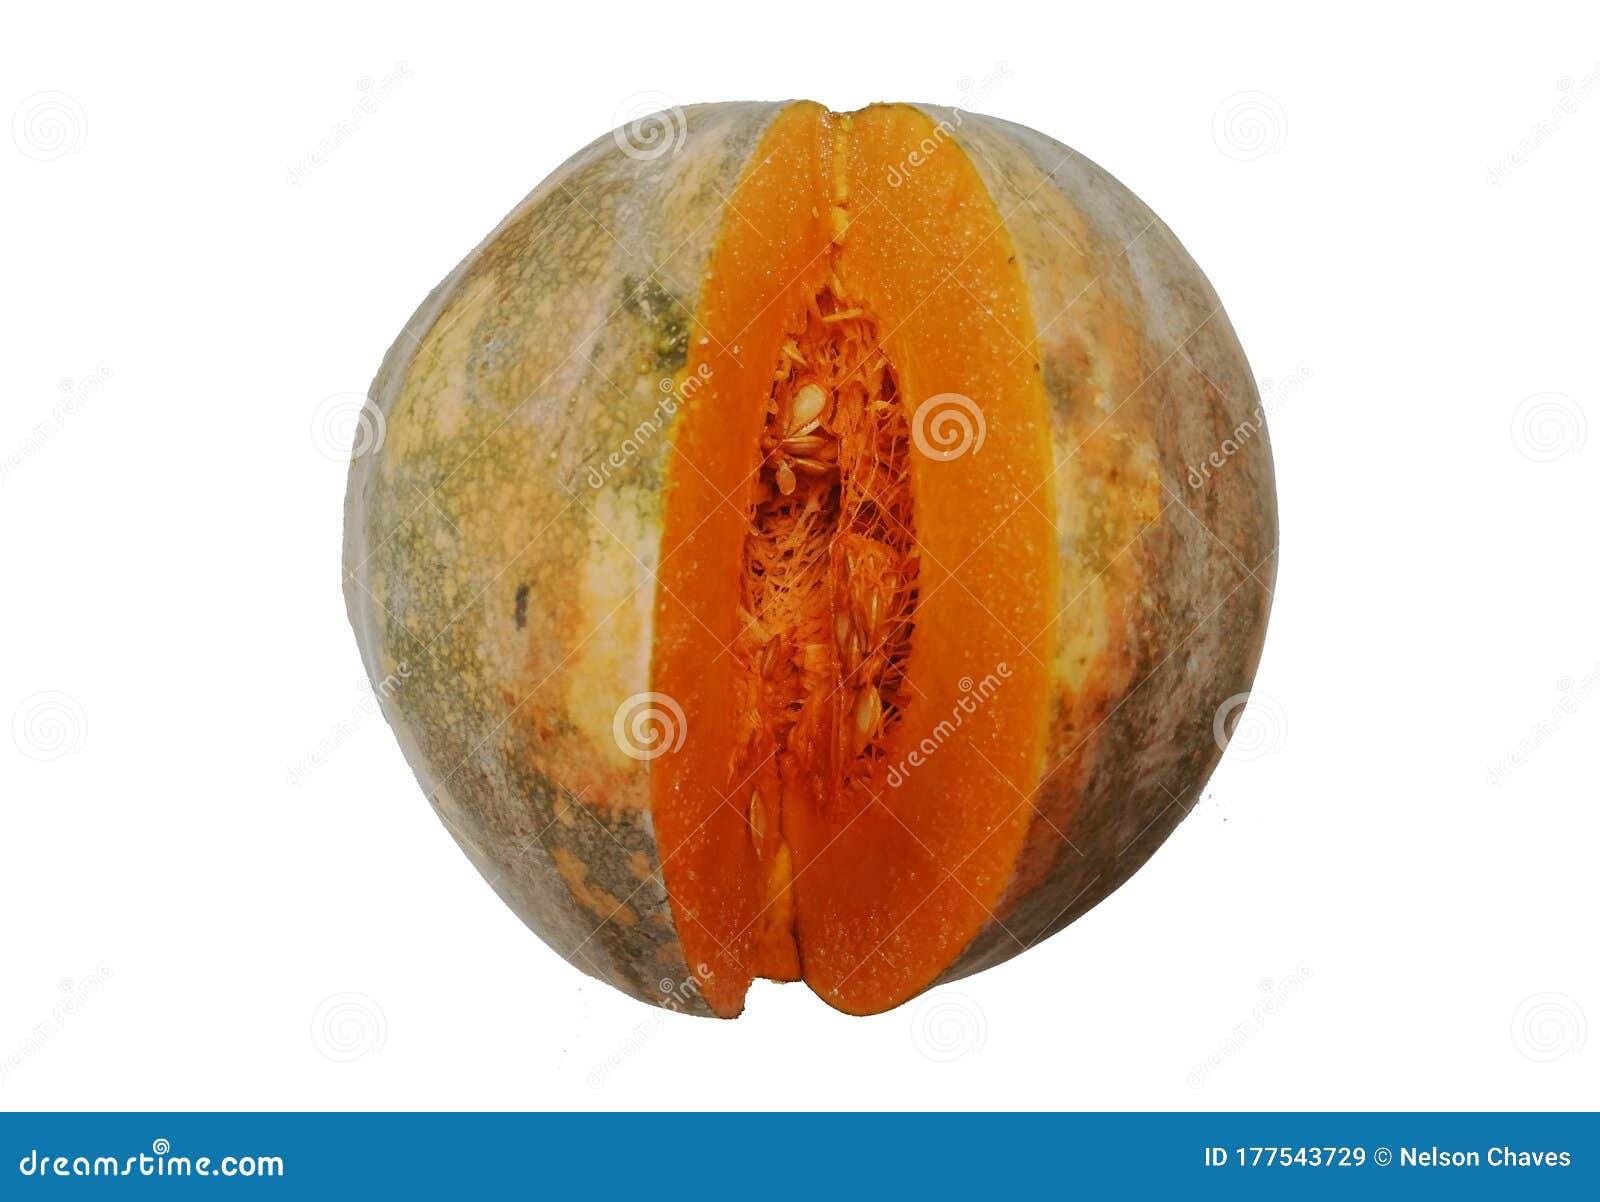 calabaza madura de color naranja